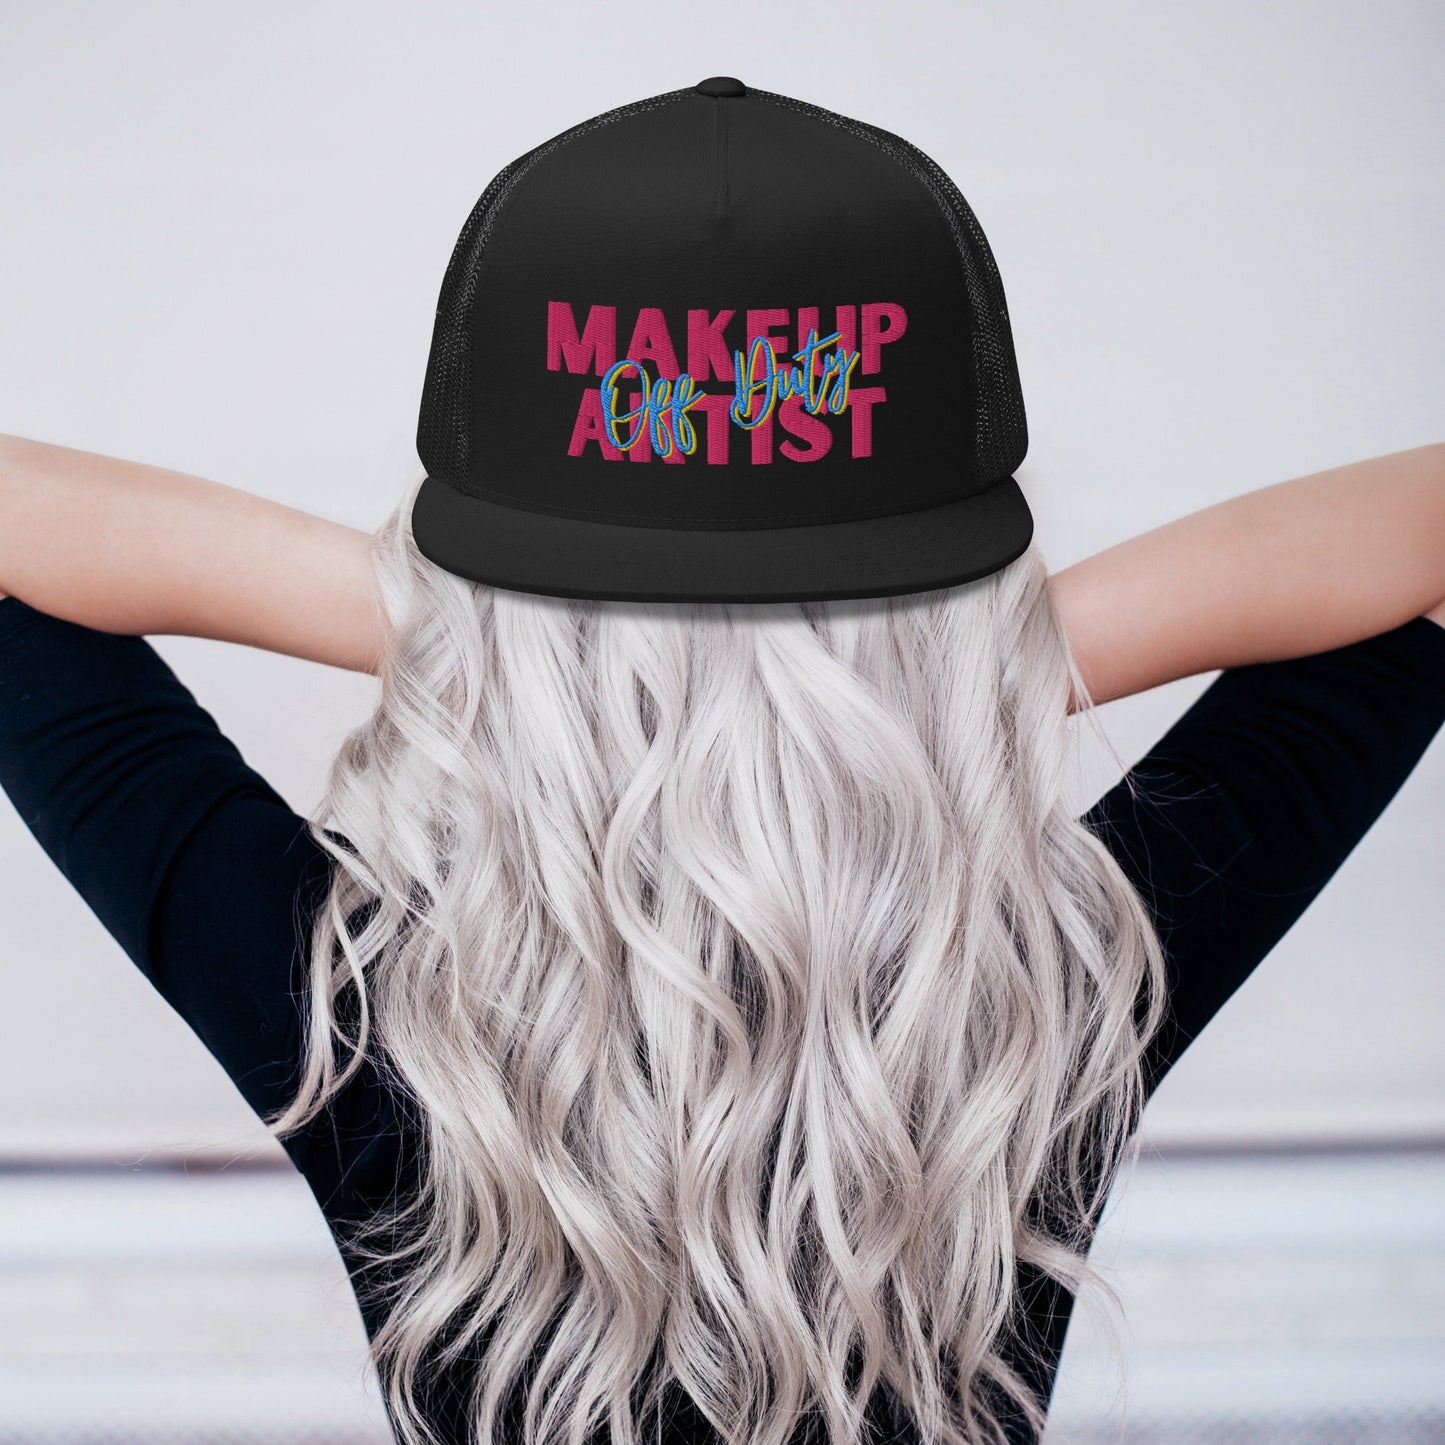 Makeup Artist Trucker Hat MUA Pro Cap Embroidered Logo Off-Duty HMUA Cosmetologist Esthetician Beautician Beauty School Student Teacher Gift